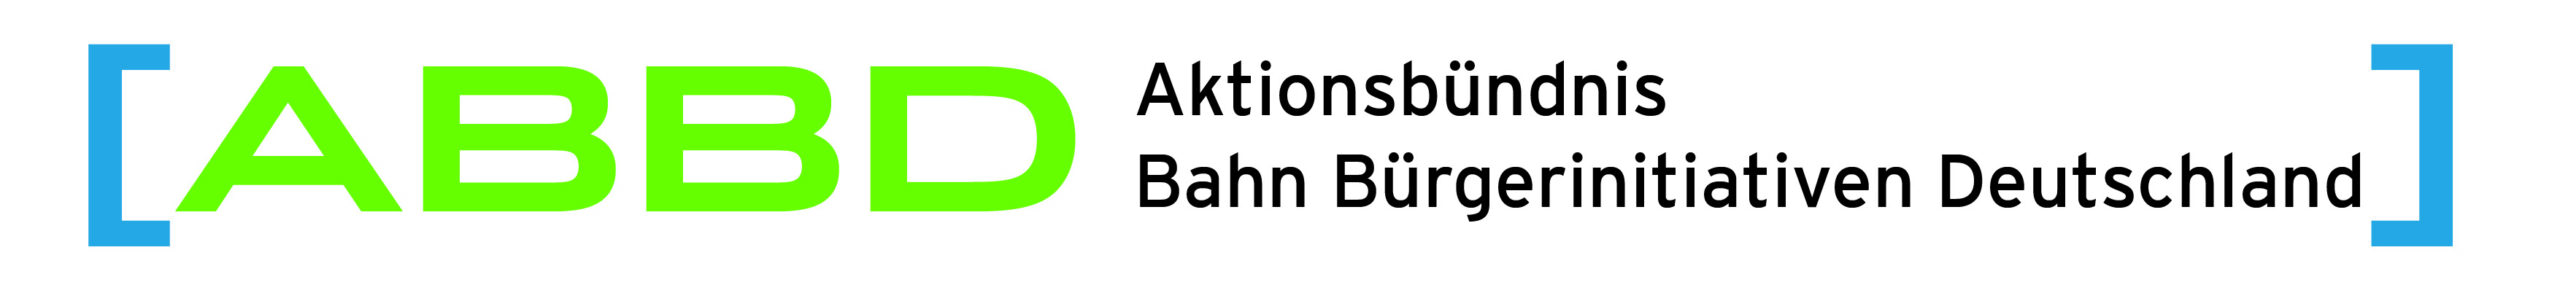 Gründung des Aktionsbündnis Bahn Bürgerinitiativen Deutschland